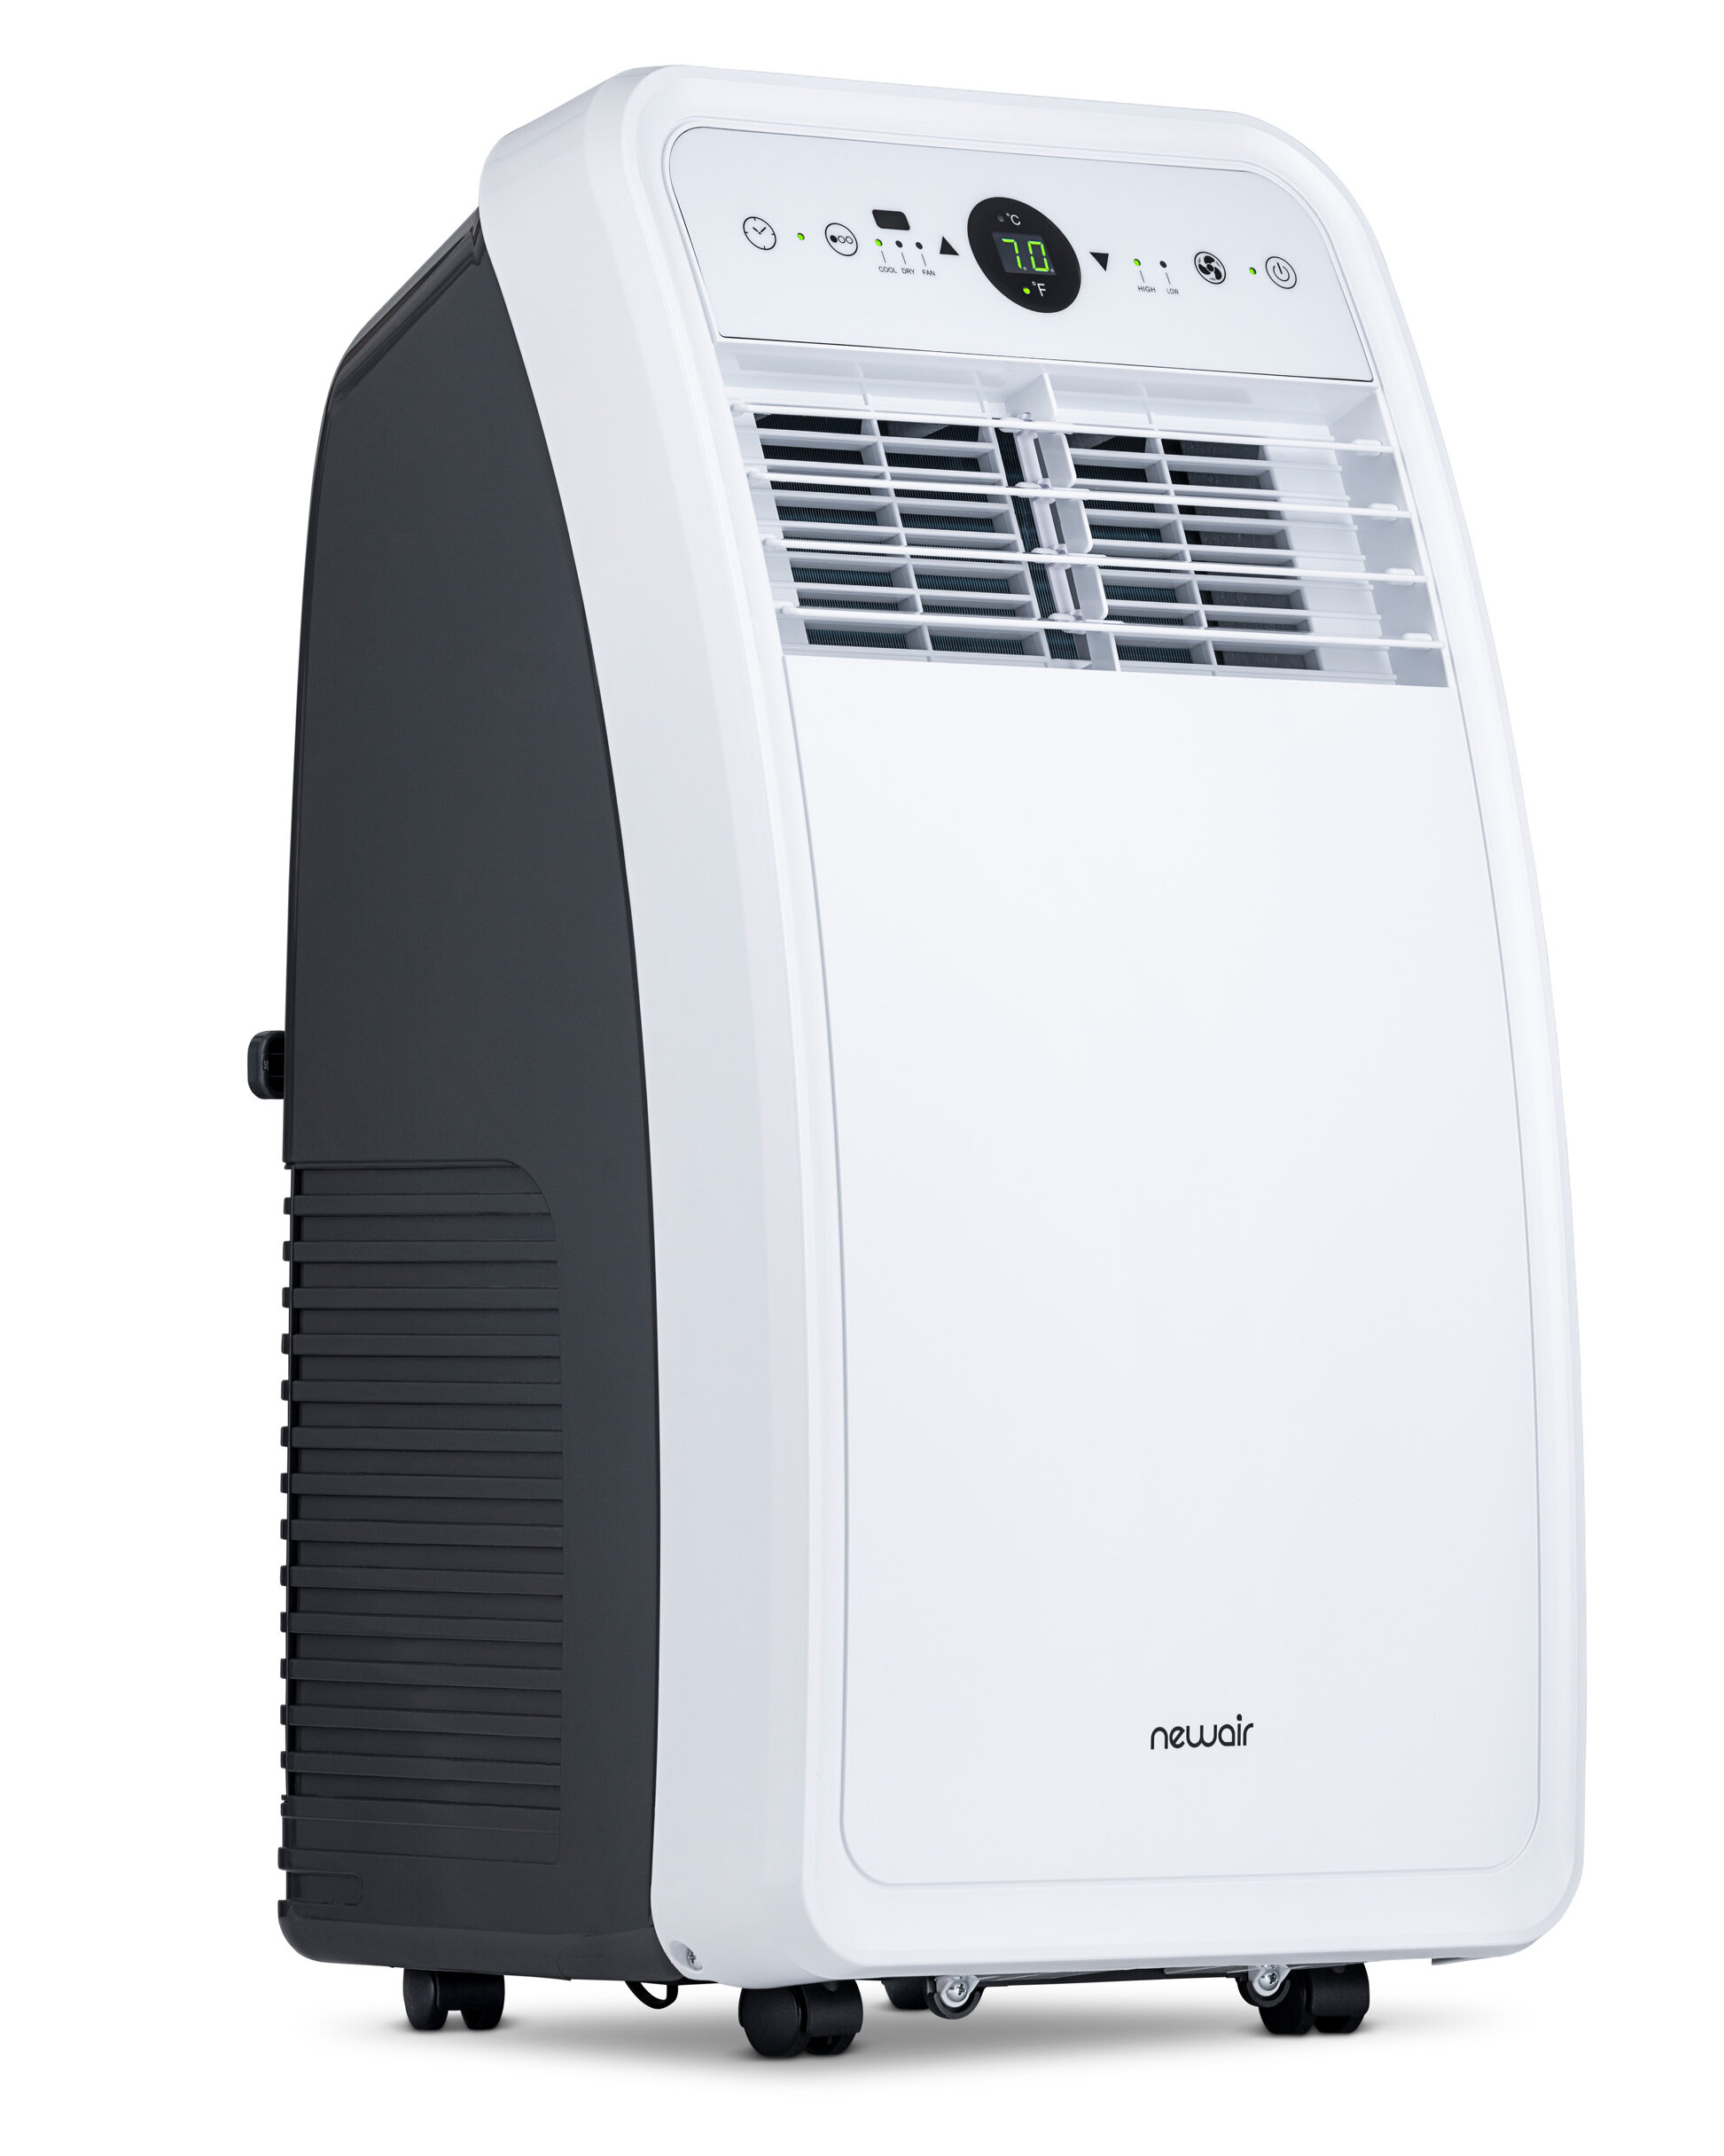 Newair 8 000 Btu Portable Air Conditioner With Remote Reviews Wayfair